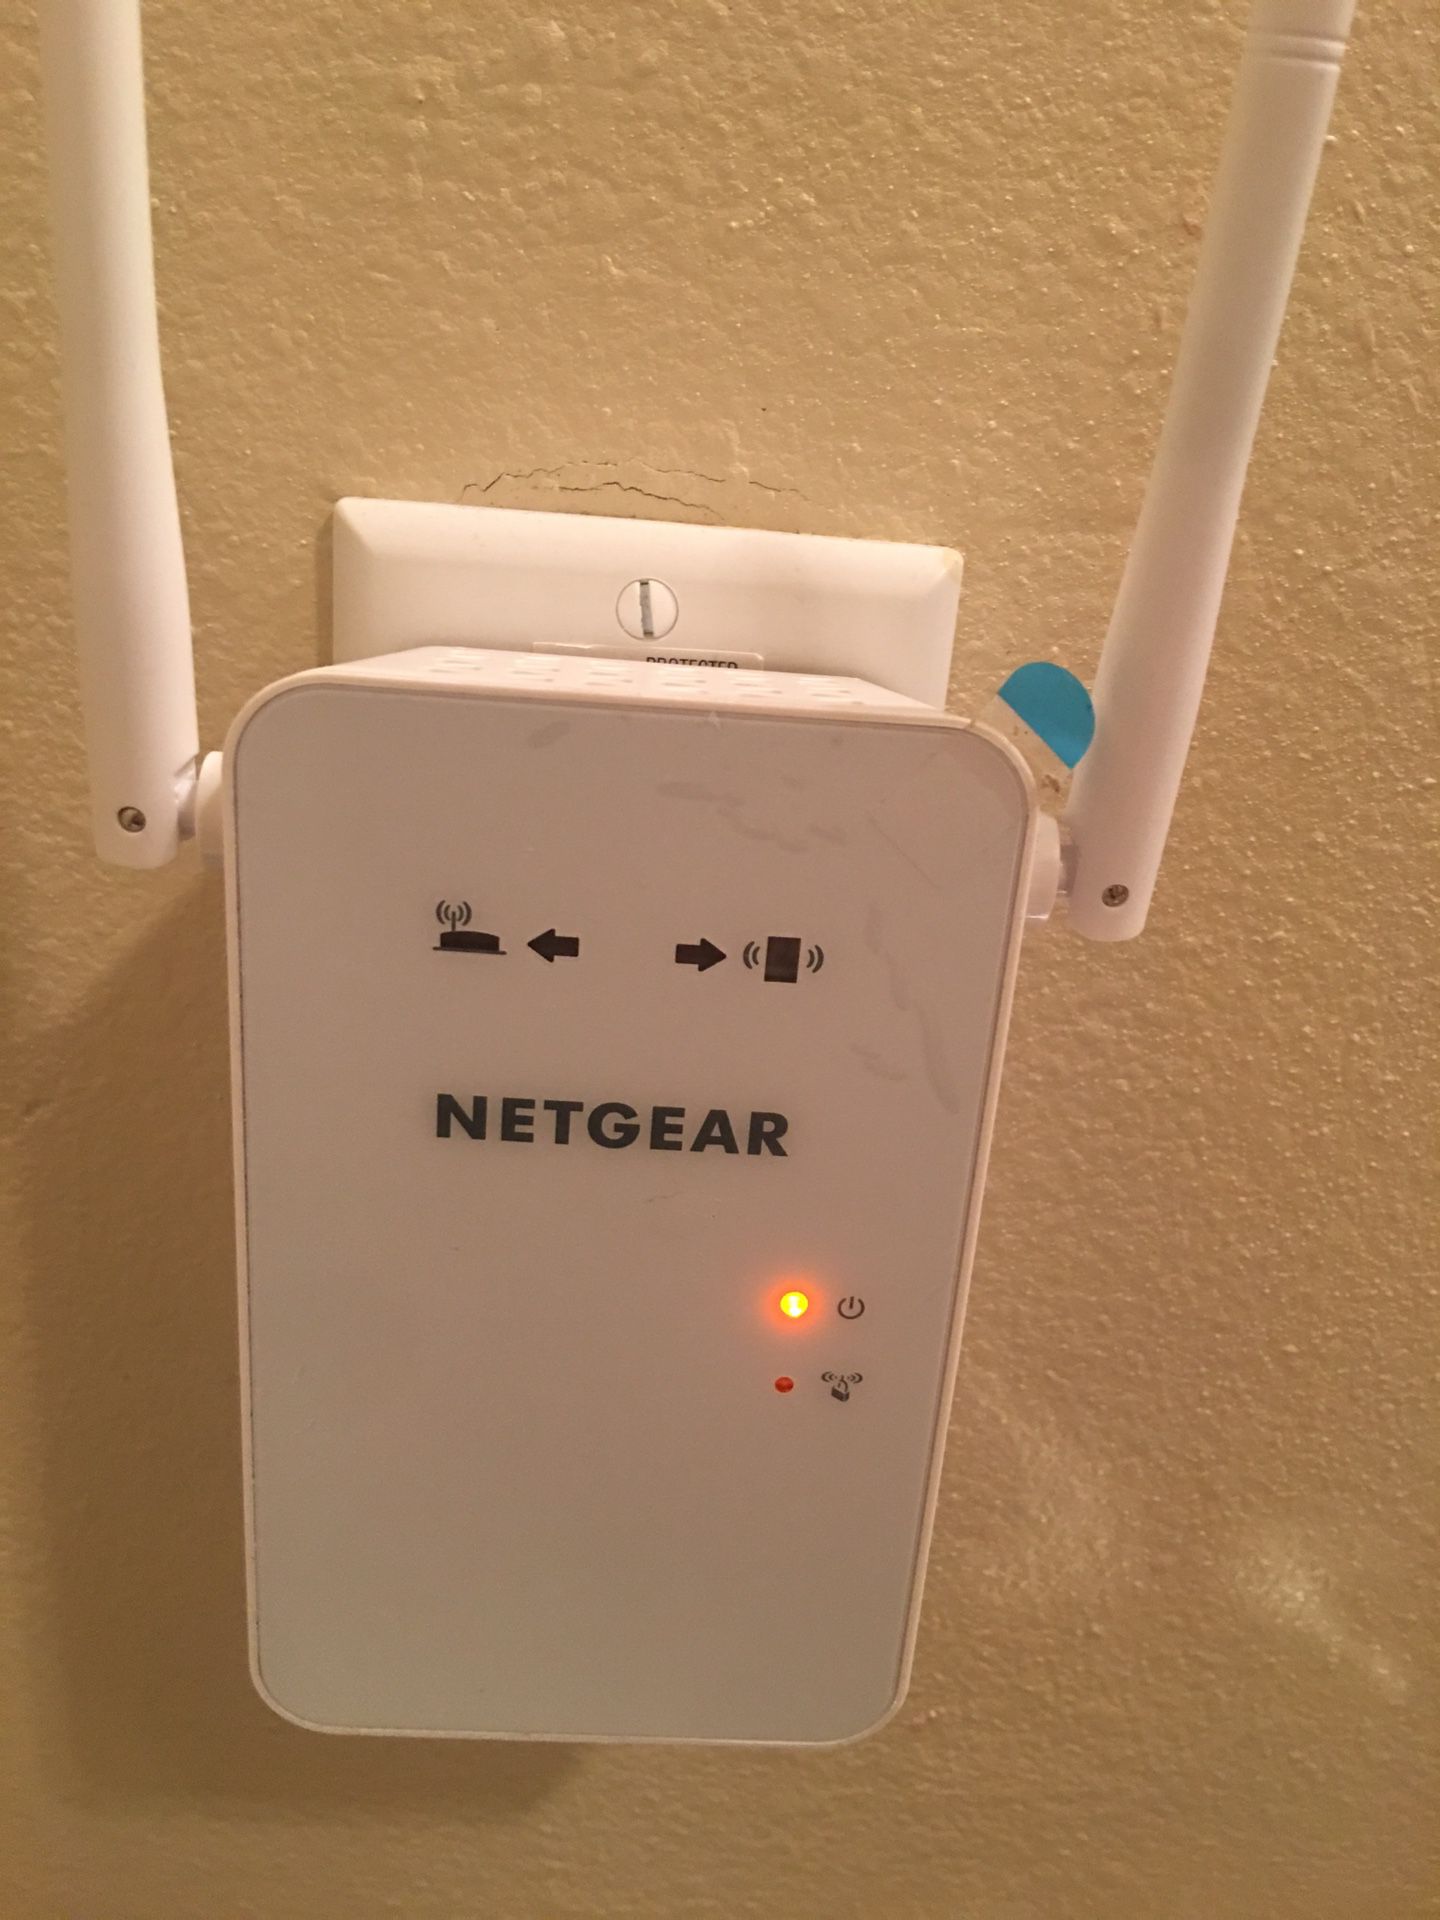 Netgear WiFi range extender